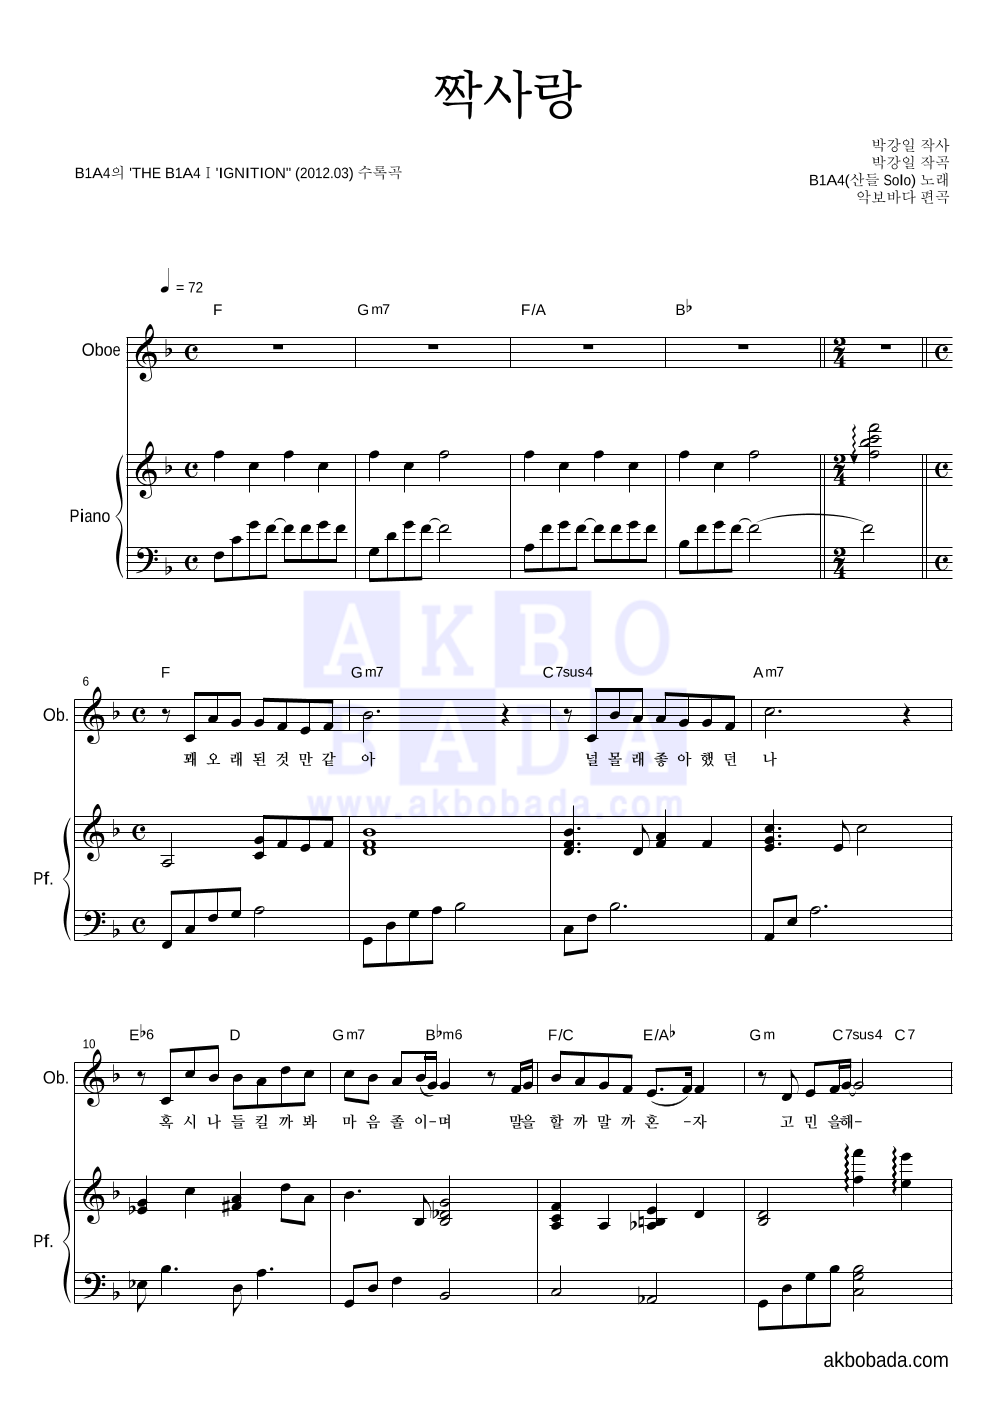 B1A4 - 짝사랑 (산들 Solo) 오보에&피아노 악보 